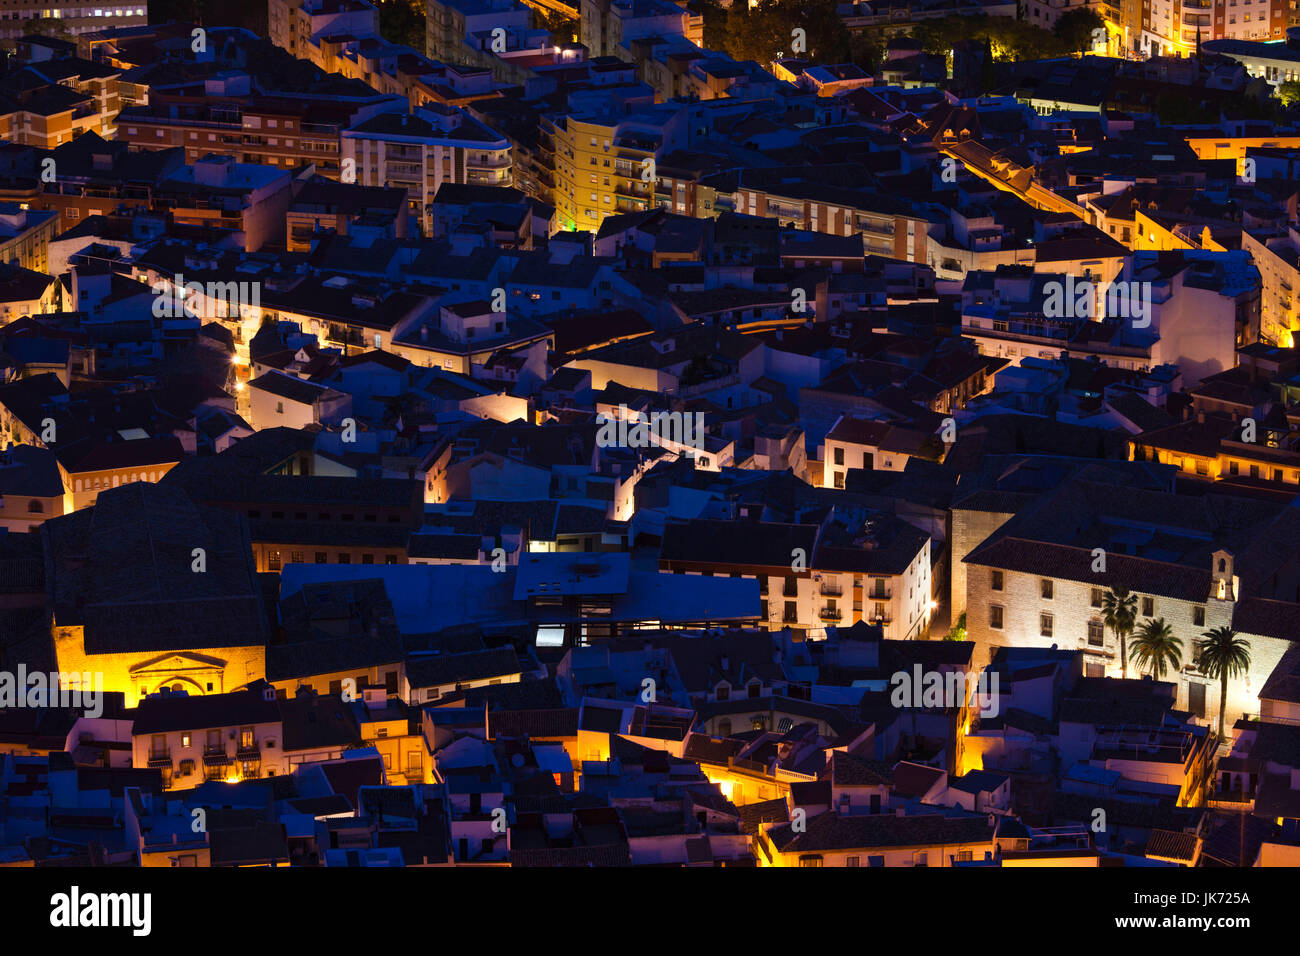 Spain, Andalucia Region, Jaen Province, Jaen, elevated city view from the Cerro de Santa Catalina hill, evening Stock Photo